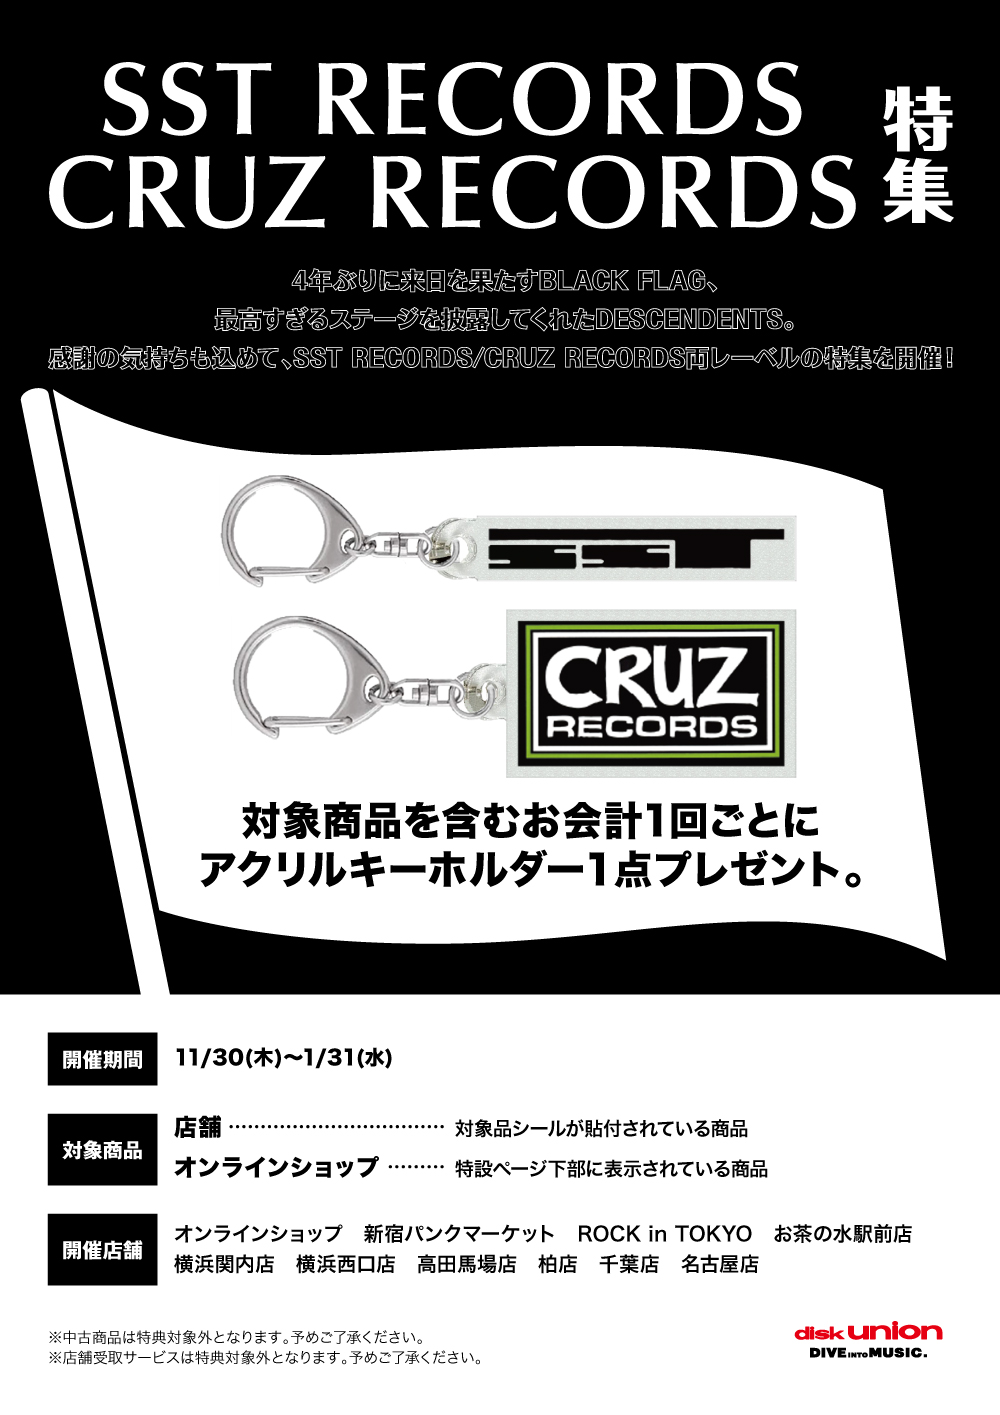 SST RECORDS/CRUZ RECORDS特集を開催!】11/30(木)から1/31(水)まで